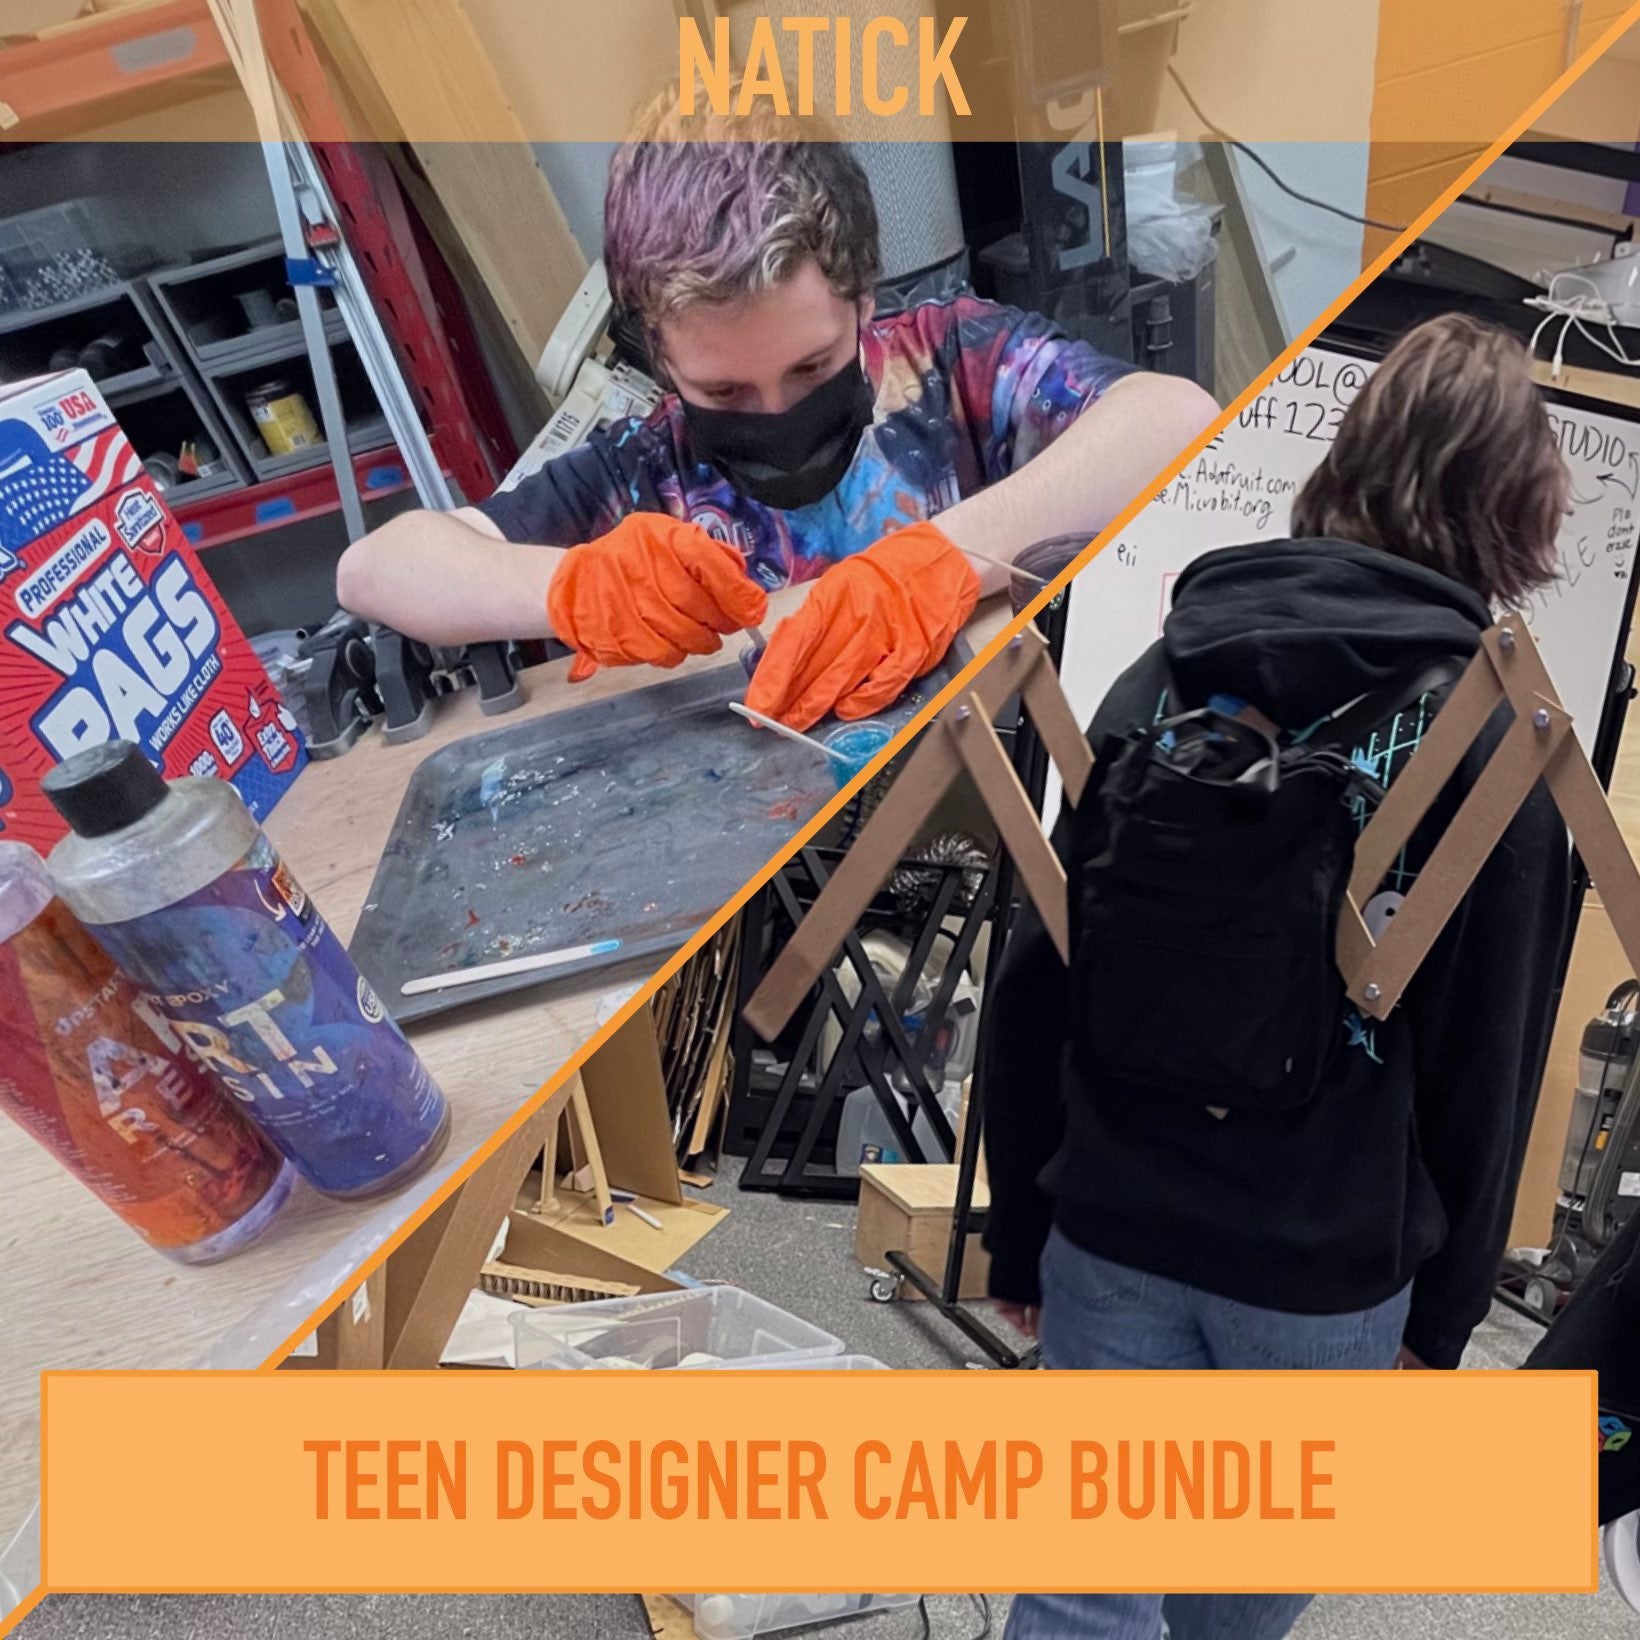 Teen Designer Camp Bundle (Natick)